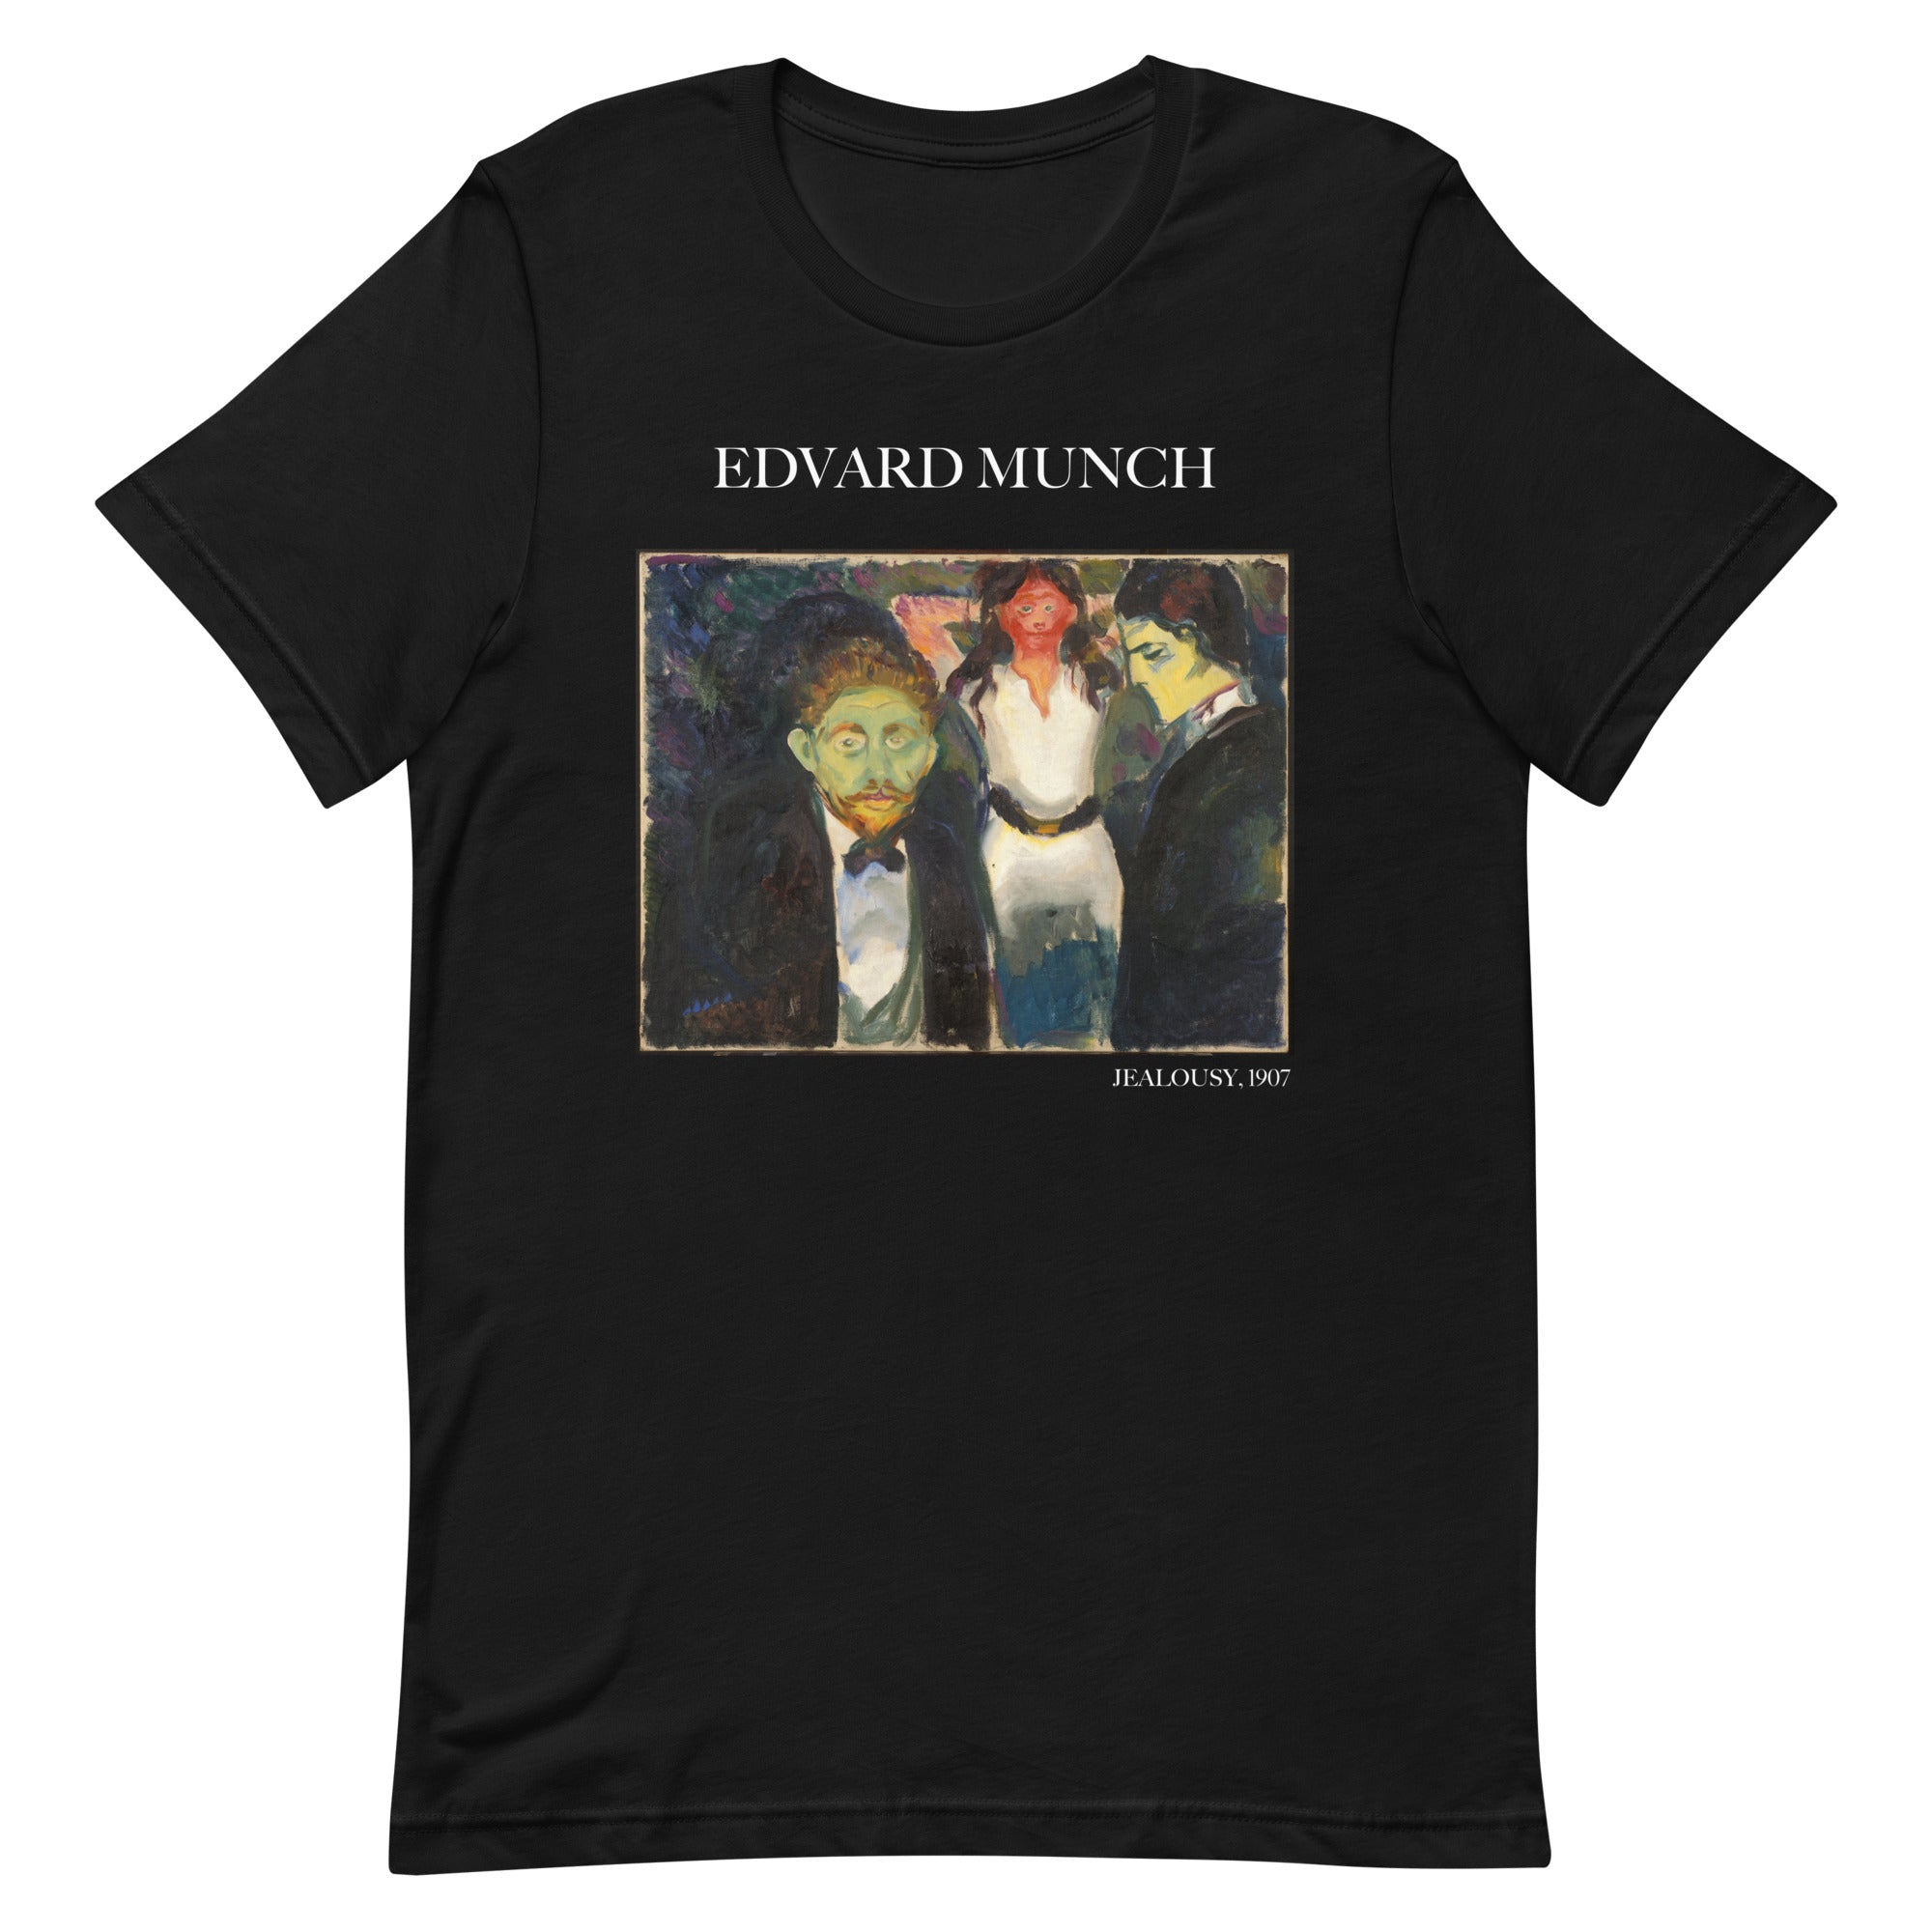 Edvard Munch 'Jealousy' Famous Painting T-Shirt | Unisex Classic Art Tee